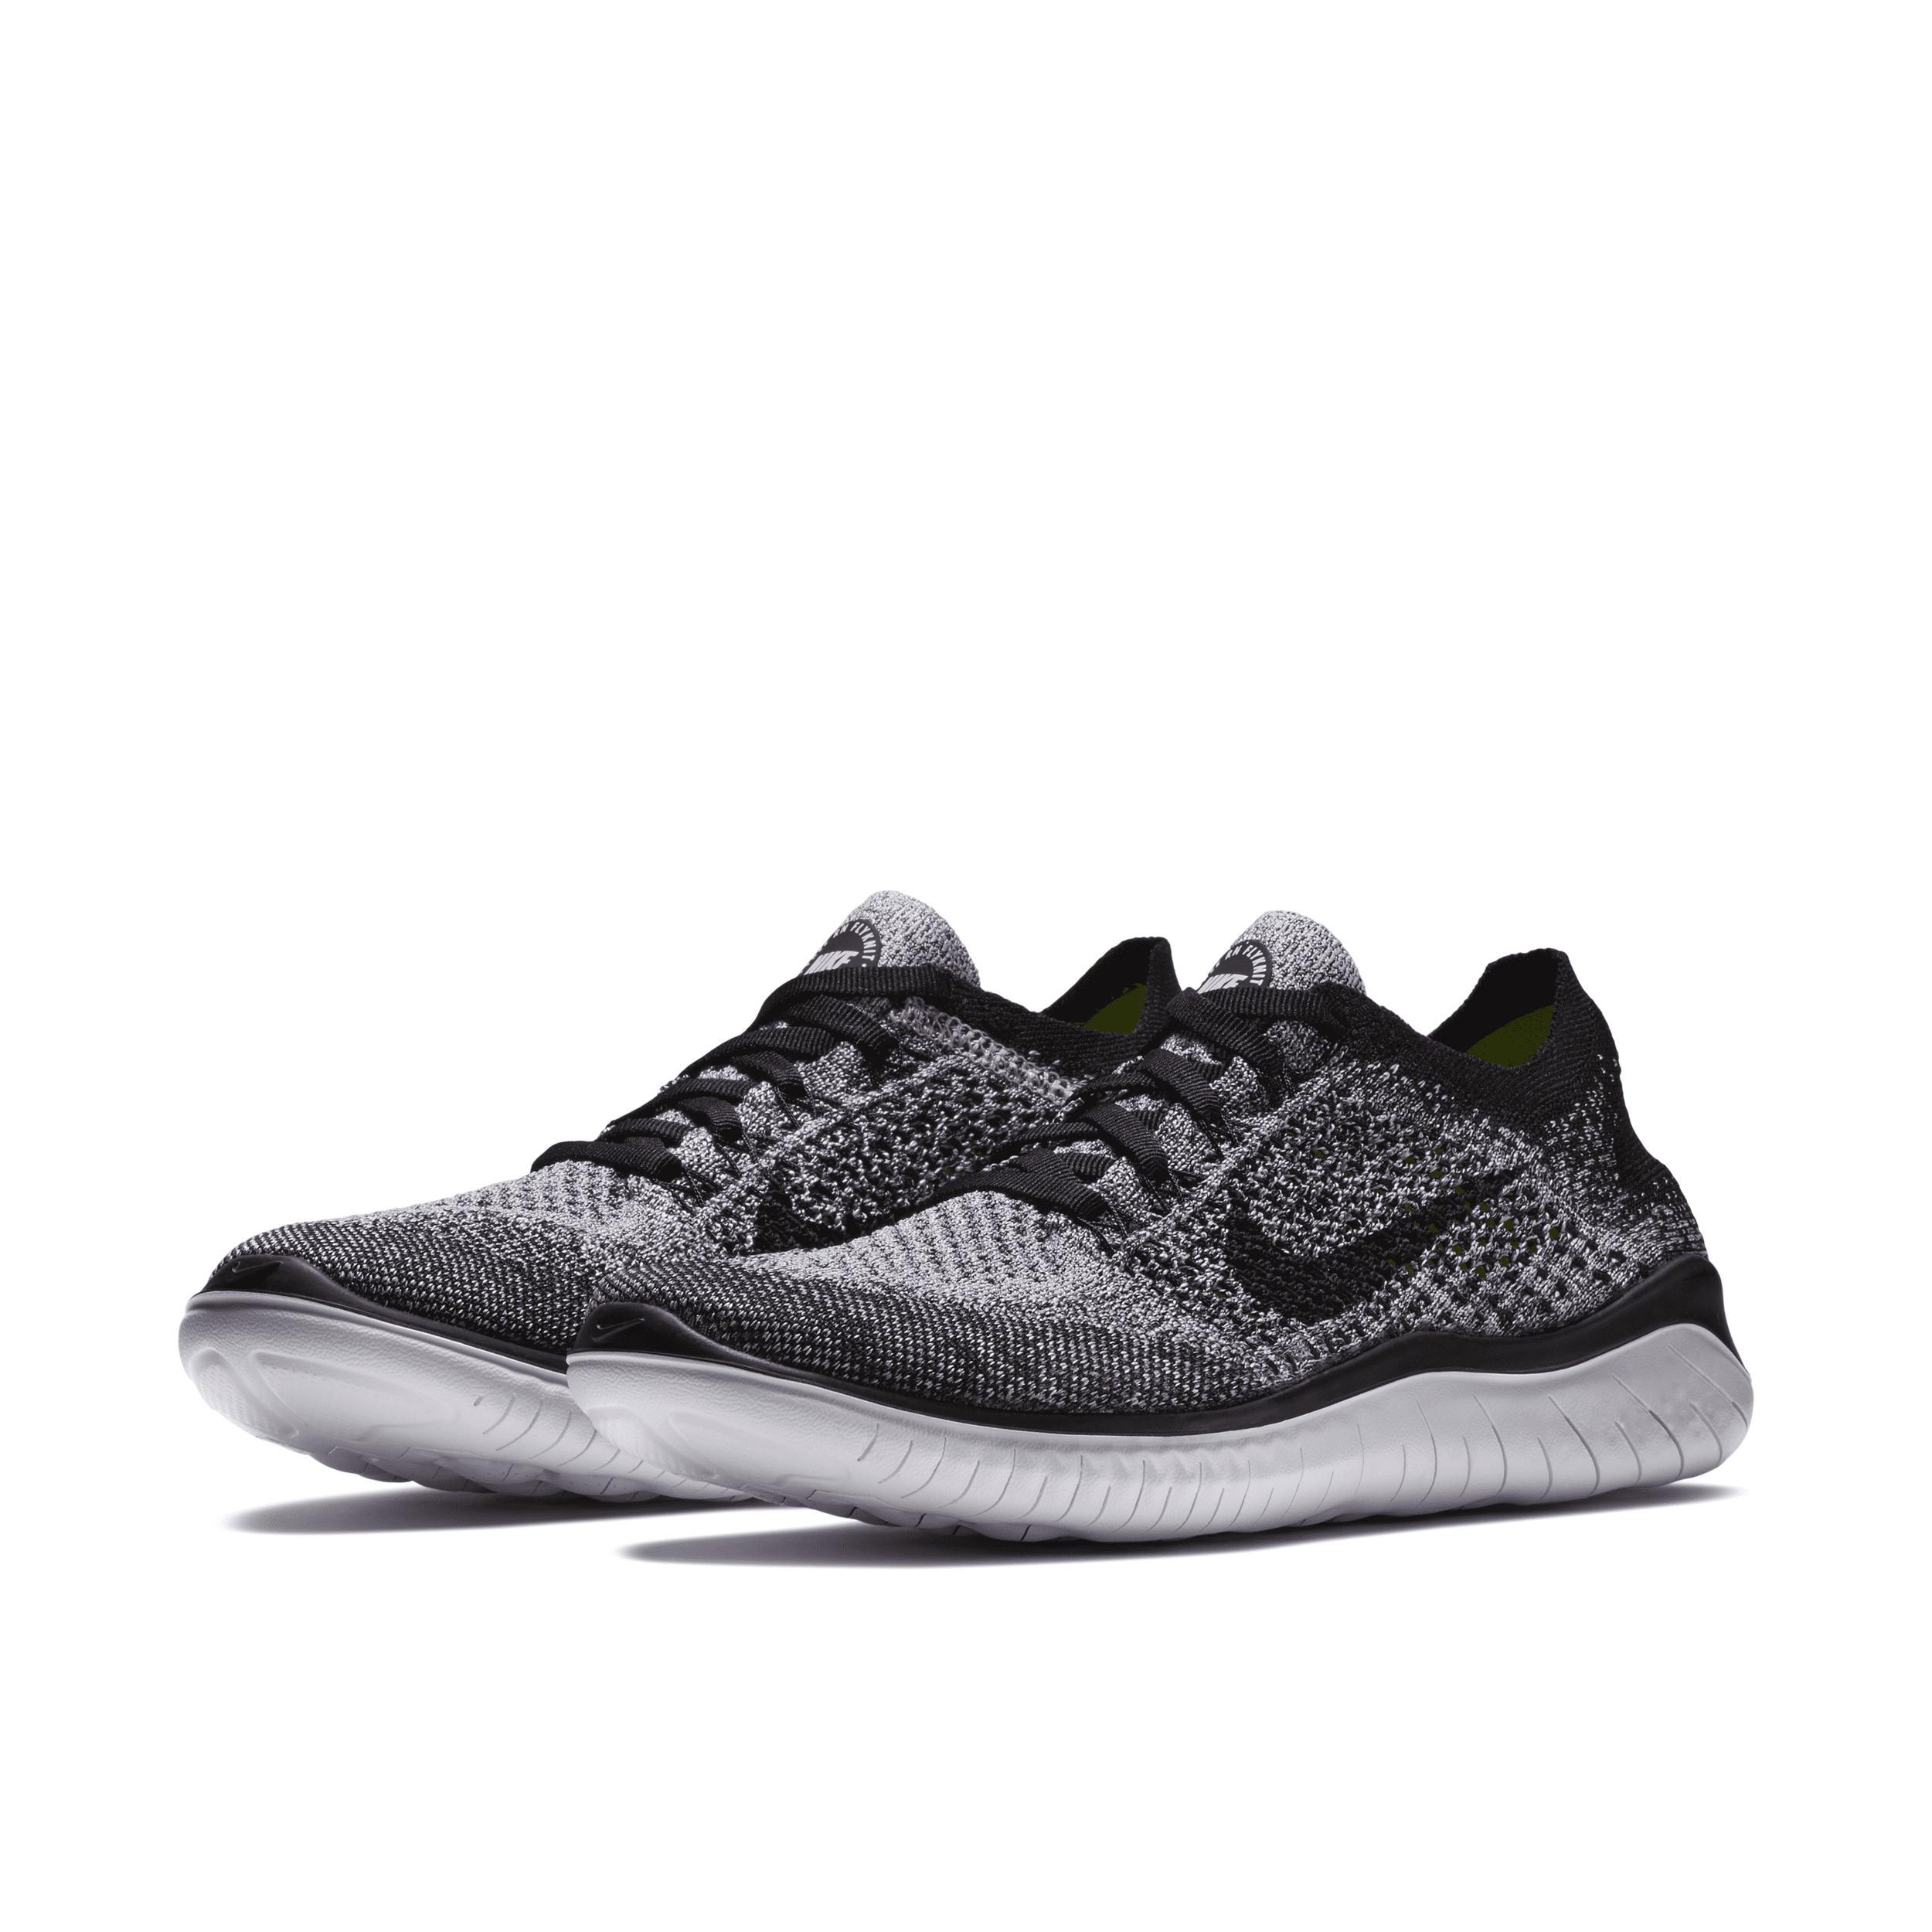 Nike Women's Free Run 2018 Running Shoes Product Image